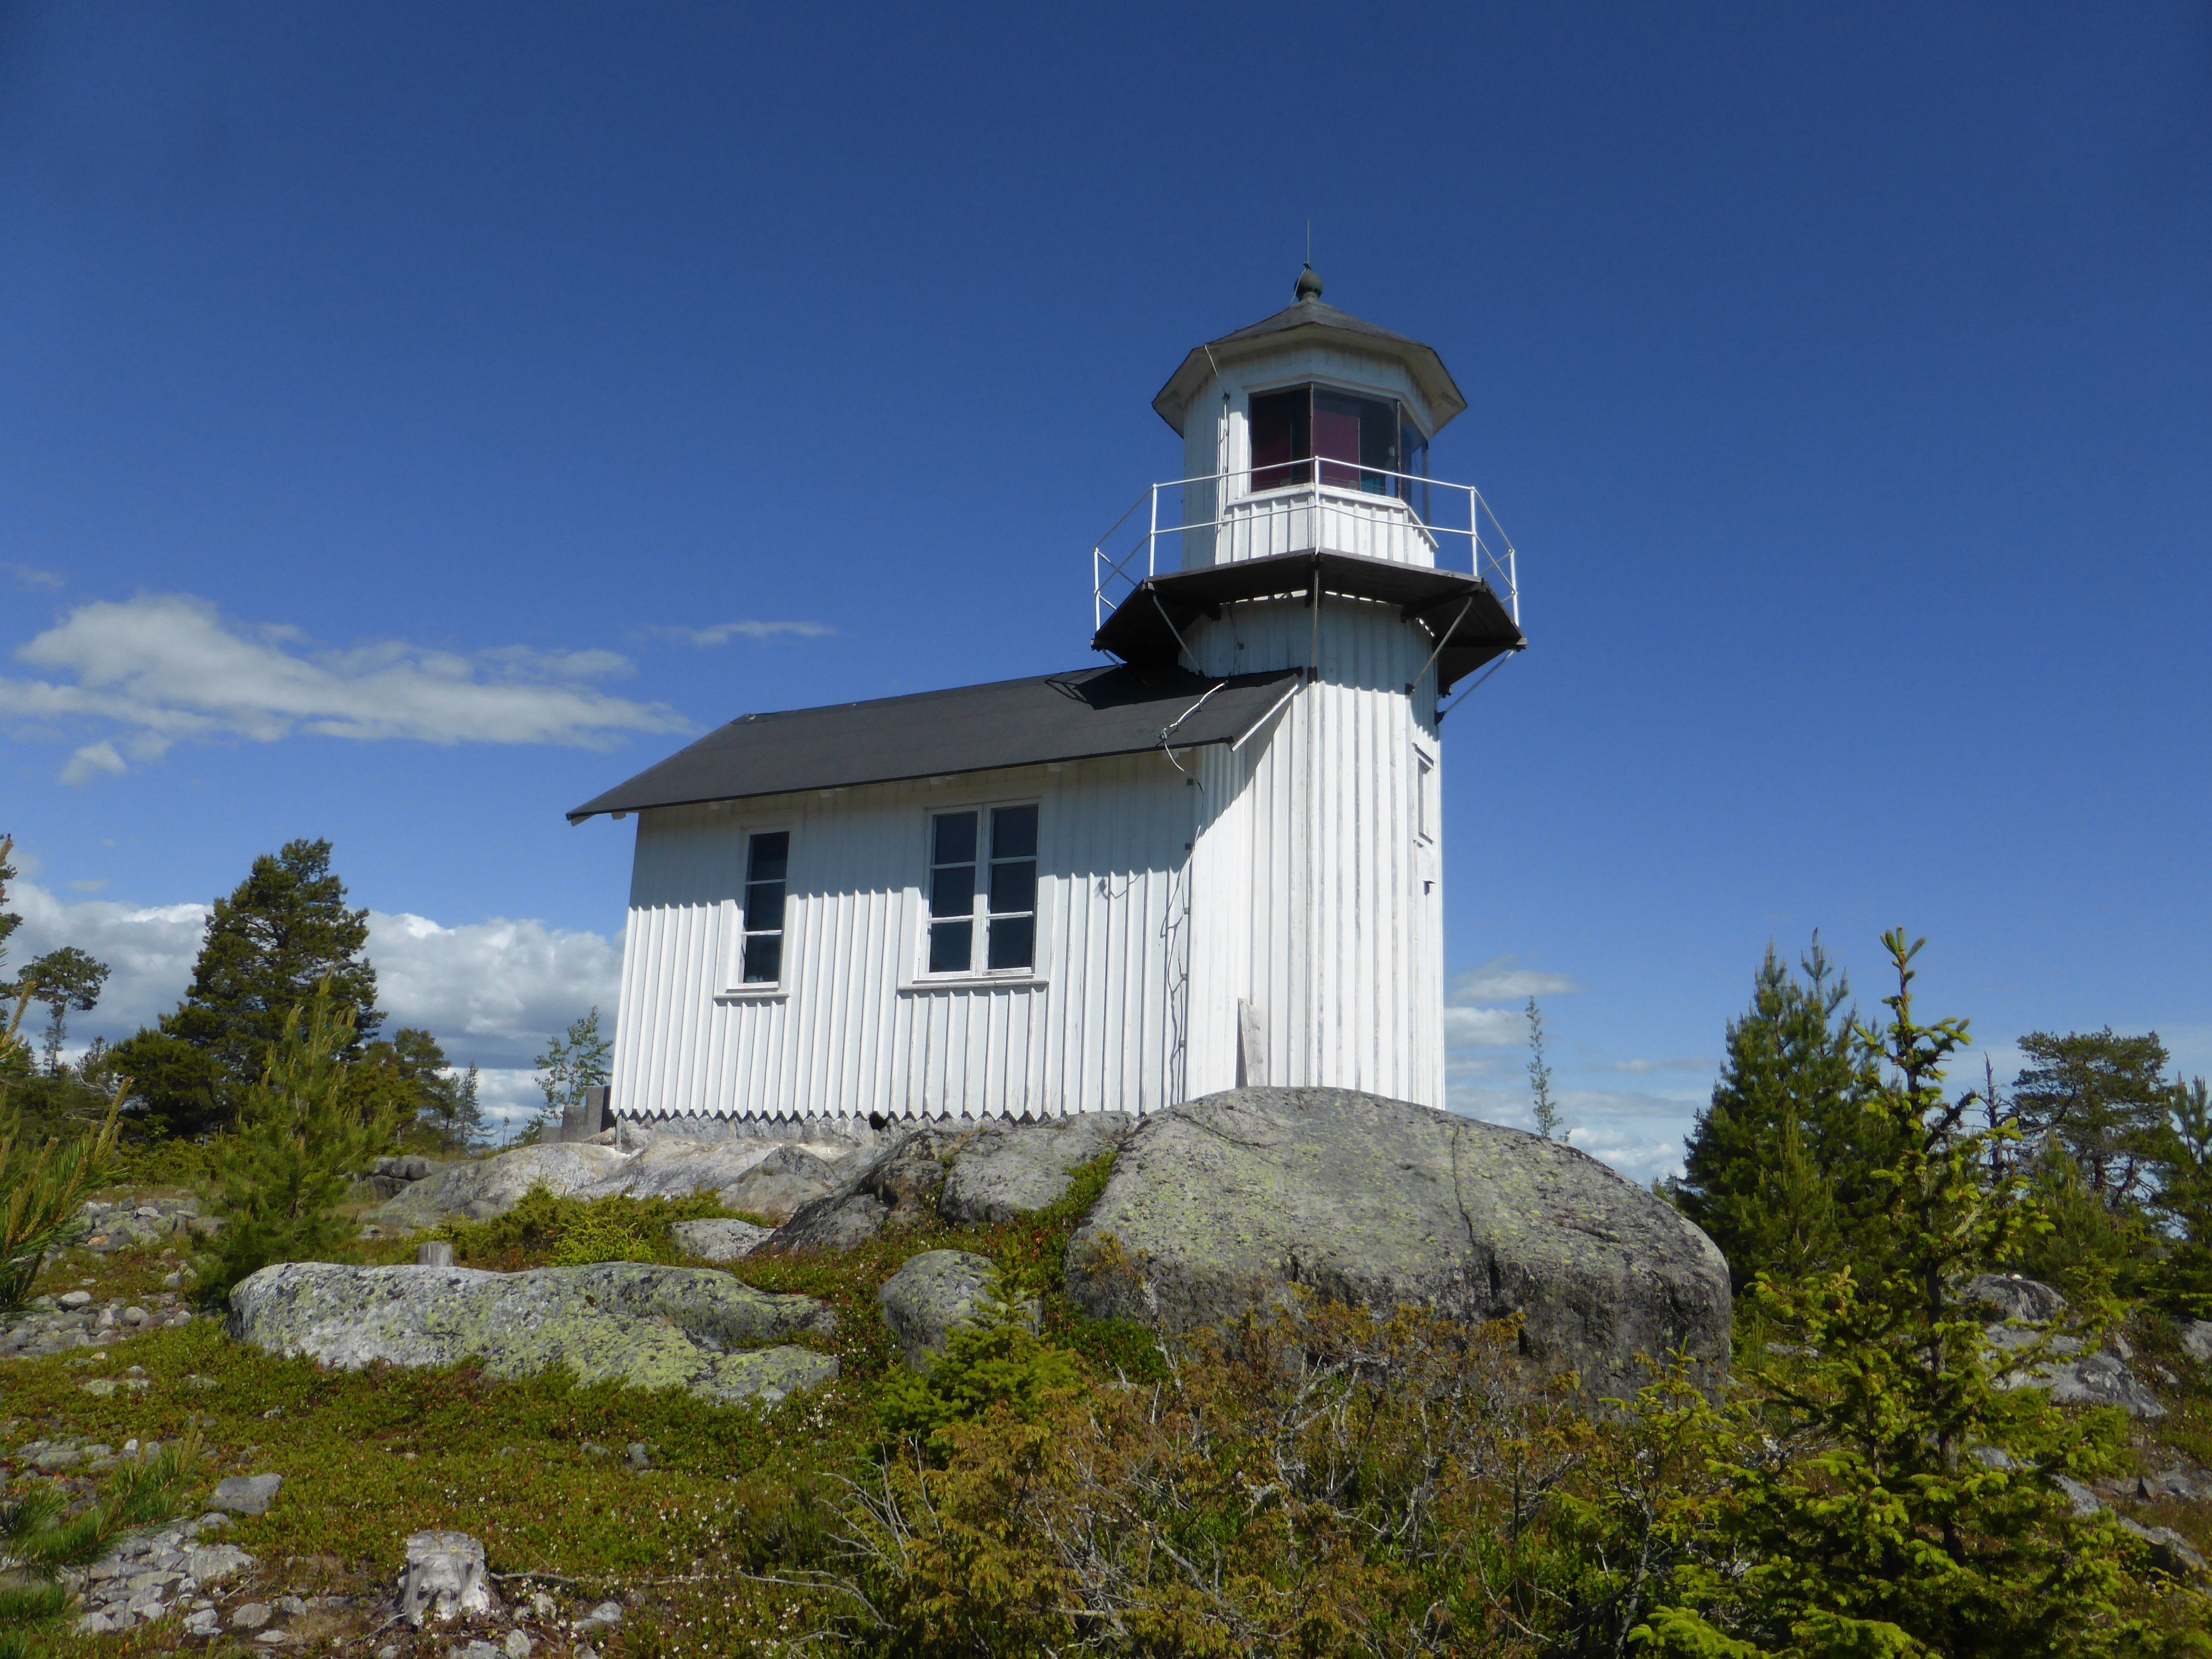 The lighthouse on Rataskär.